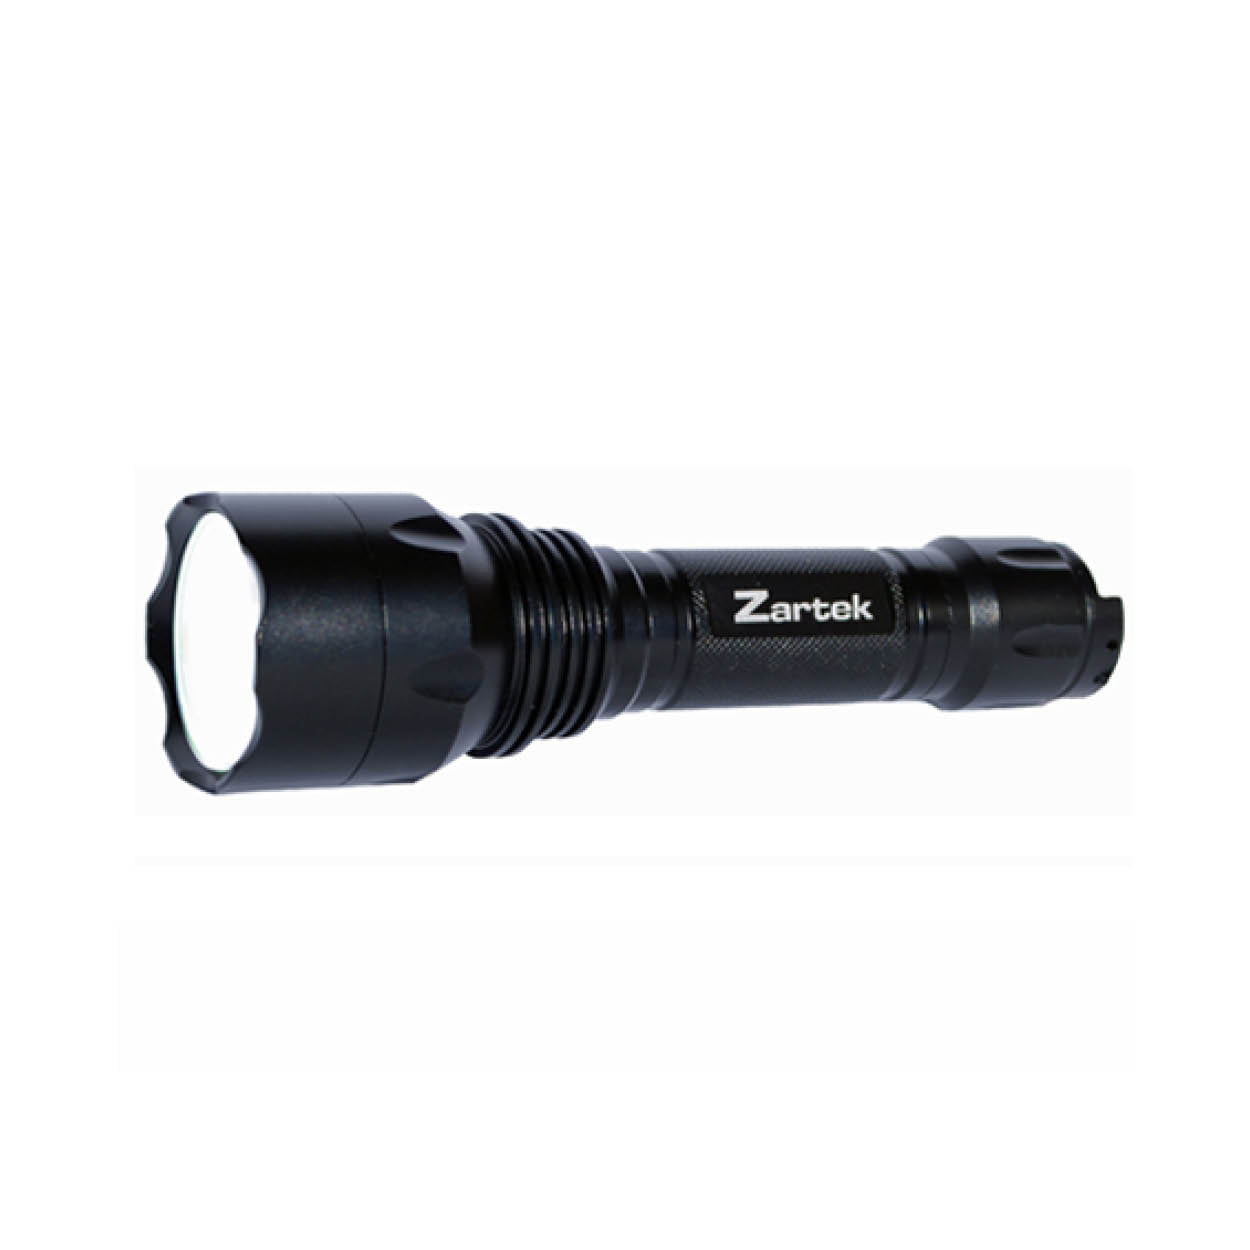 Zartek Rechargeable LED Torch 900lm